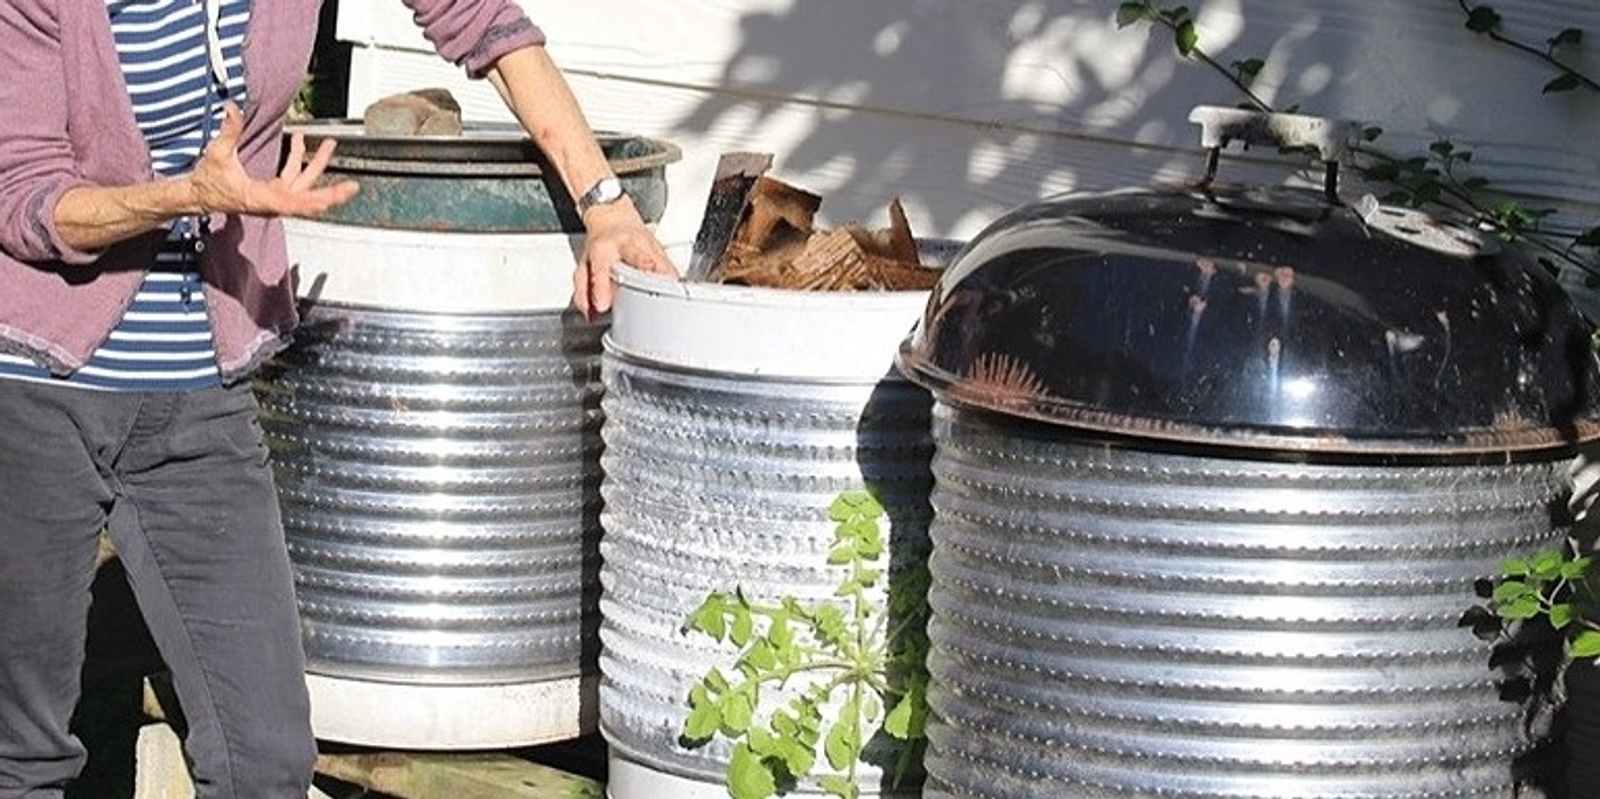 Washing Machine to DIY Worm Farm and Grass Tumbler